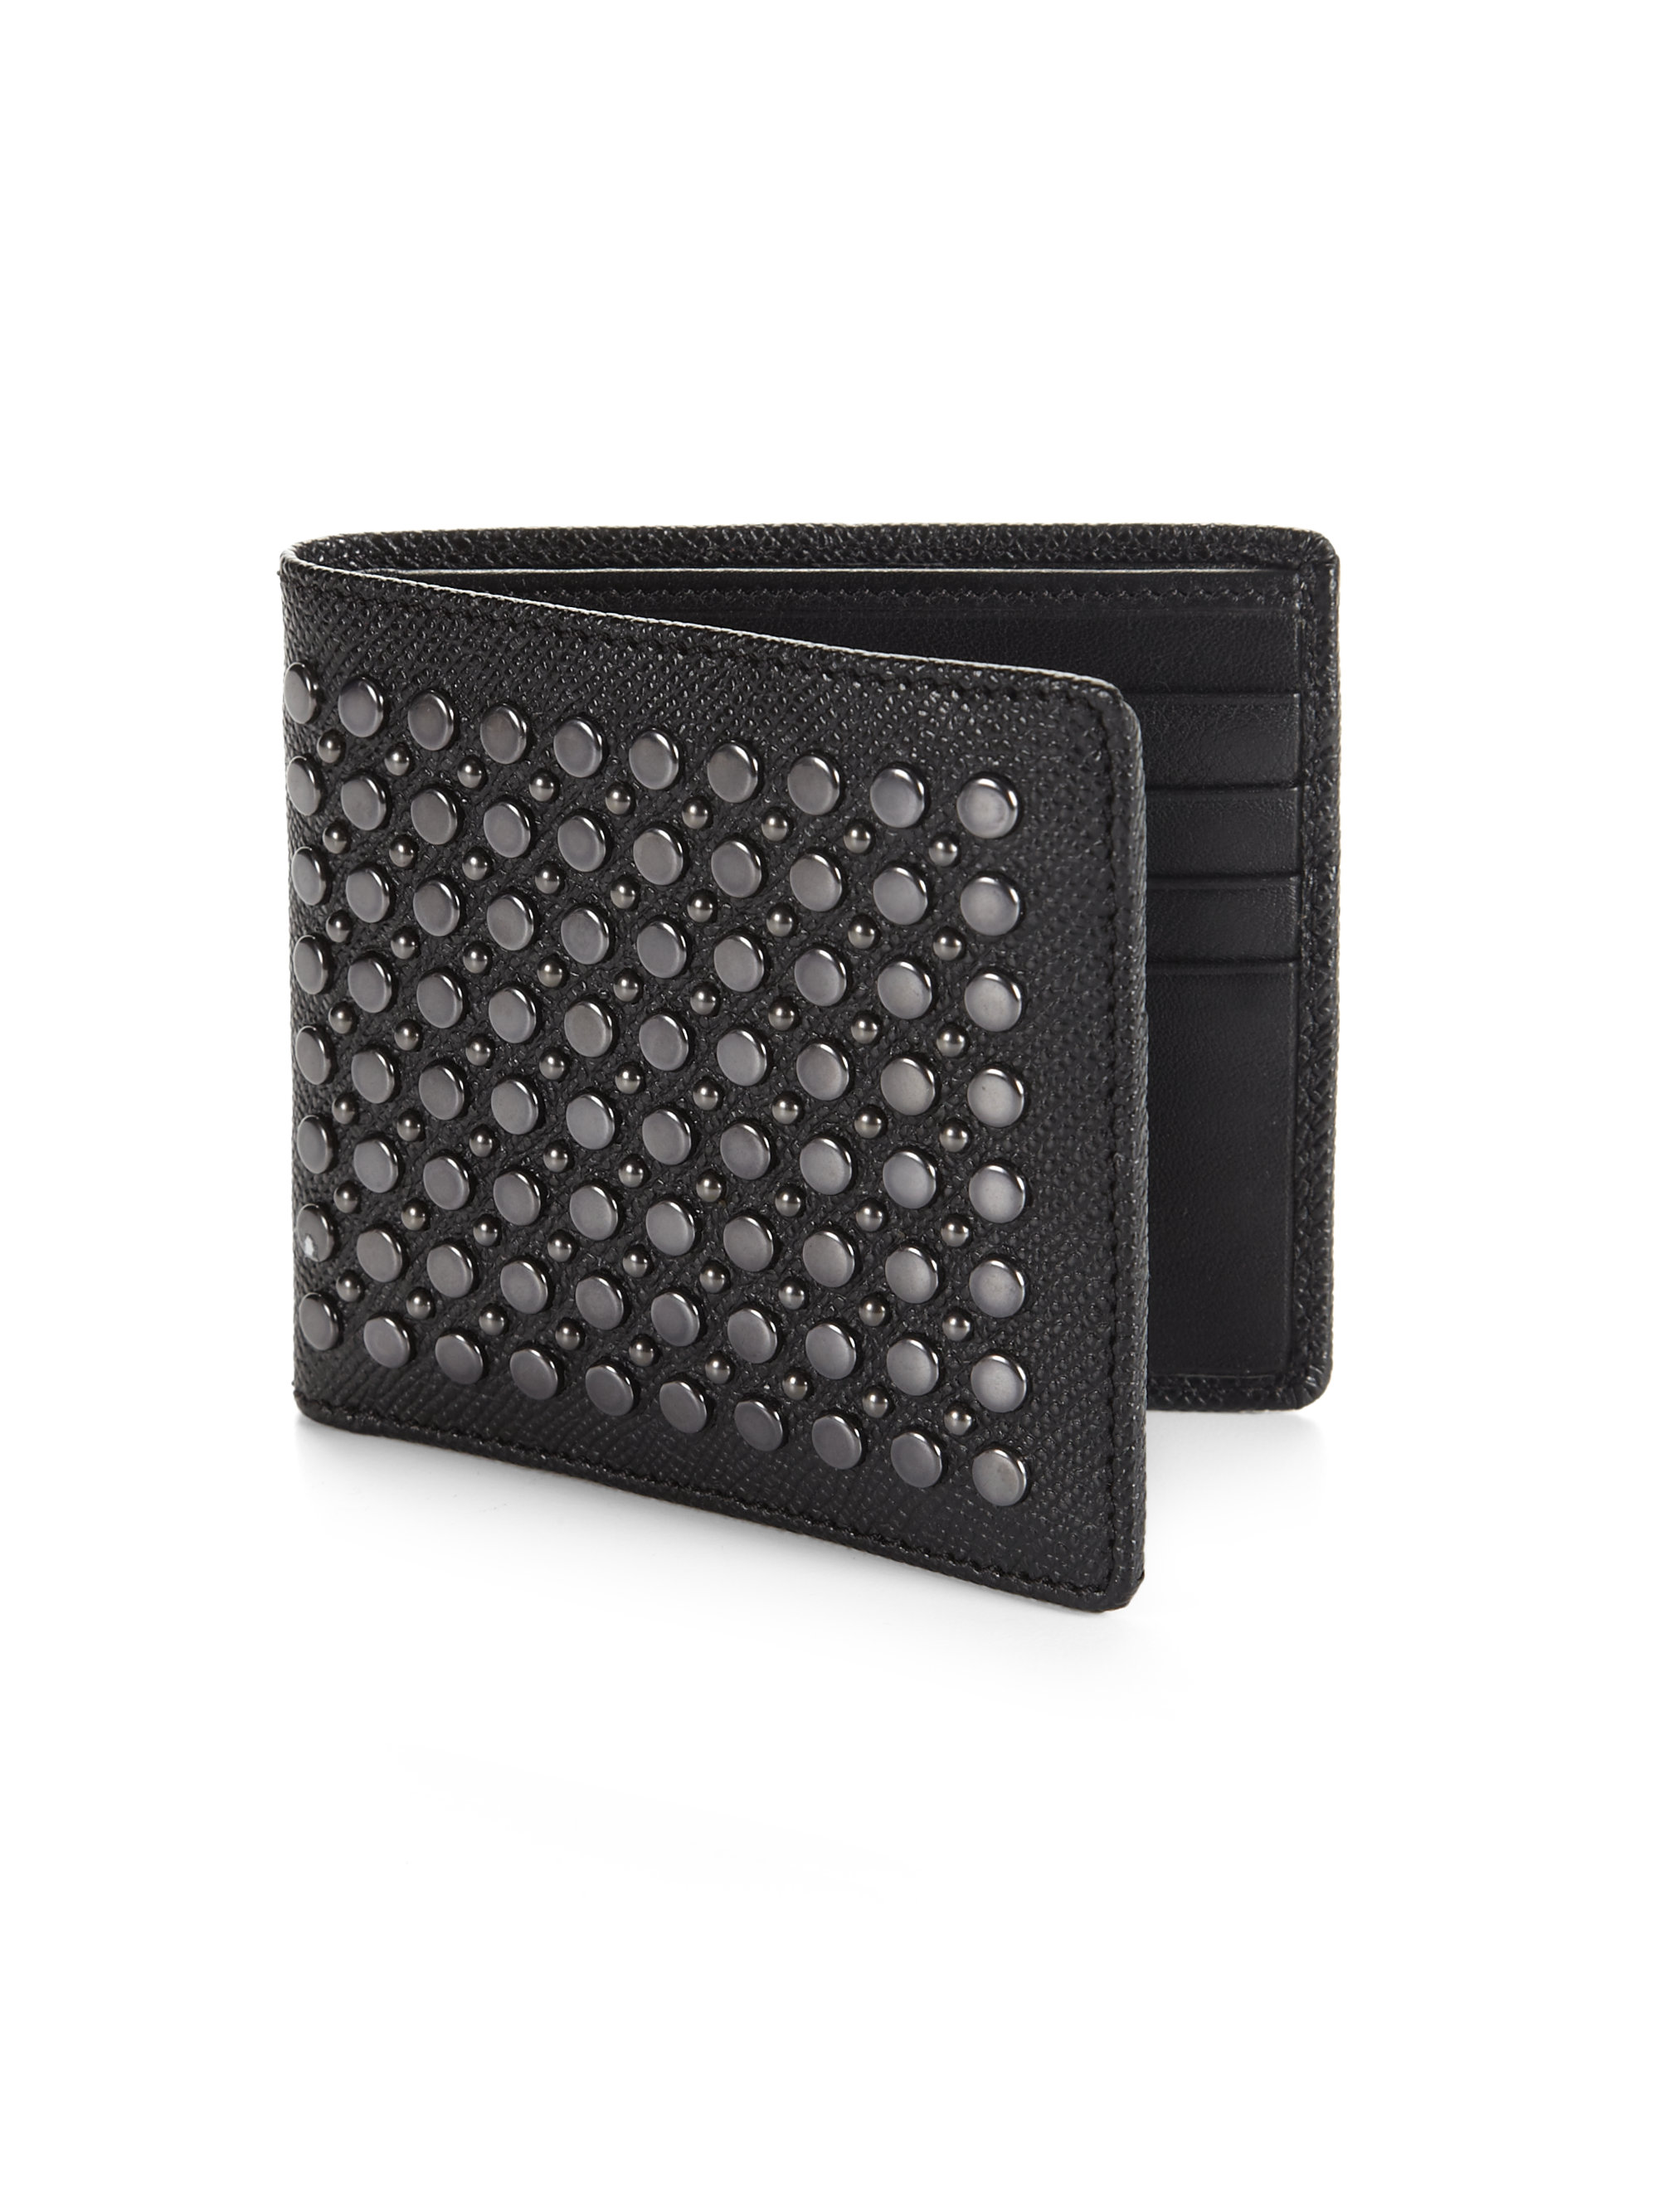 Burberry Studded Billfold Wallet in Black for Men | Lyst